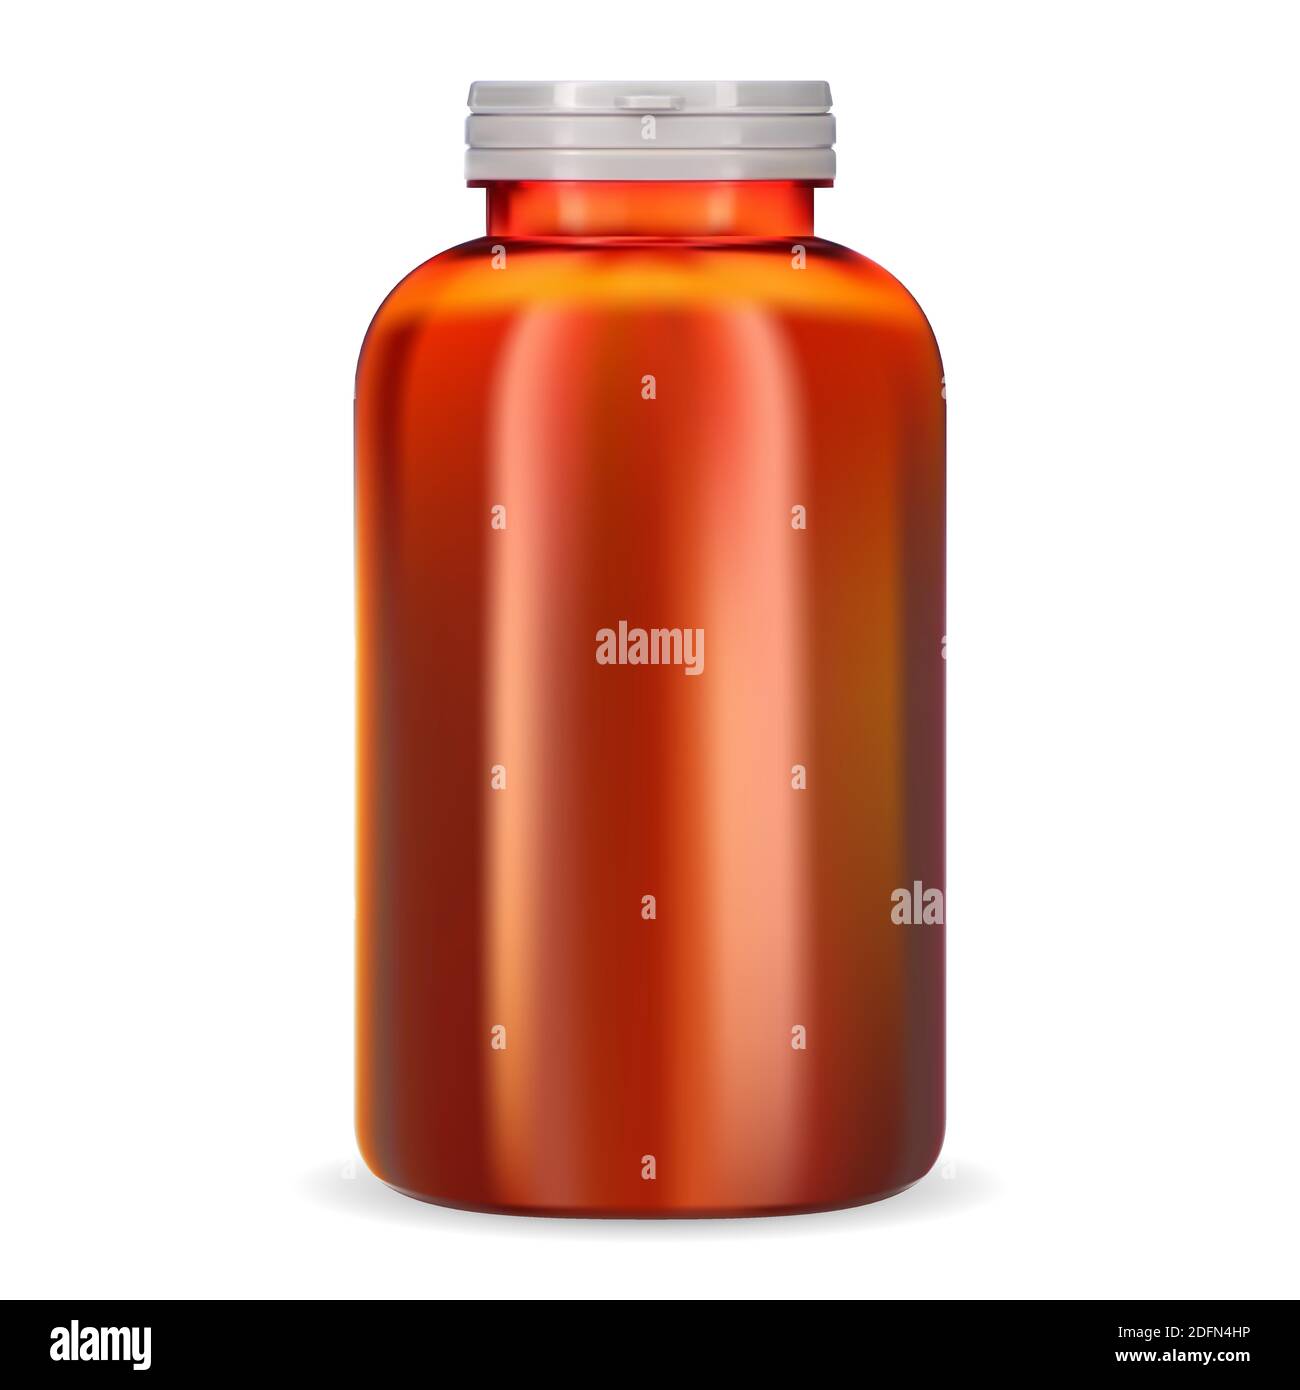 https://c8.alamy.com/comp/2DFN4HP/supplement-bottle-orange-plastic-vitamin-pill-jar-isolated-3d-container-blank-for-medical-capsule-or-tablet-pharmaceutical-medicine-package-design-2DFN4HP.jpg